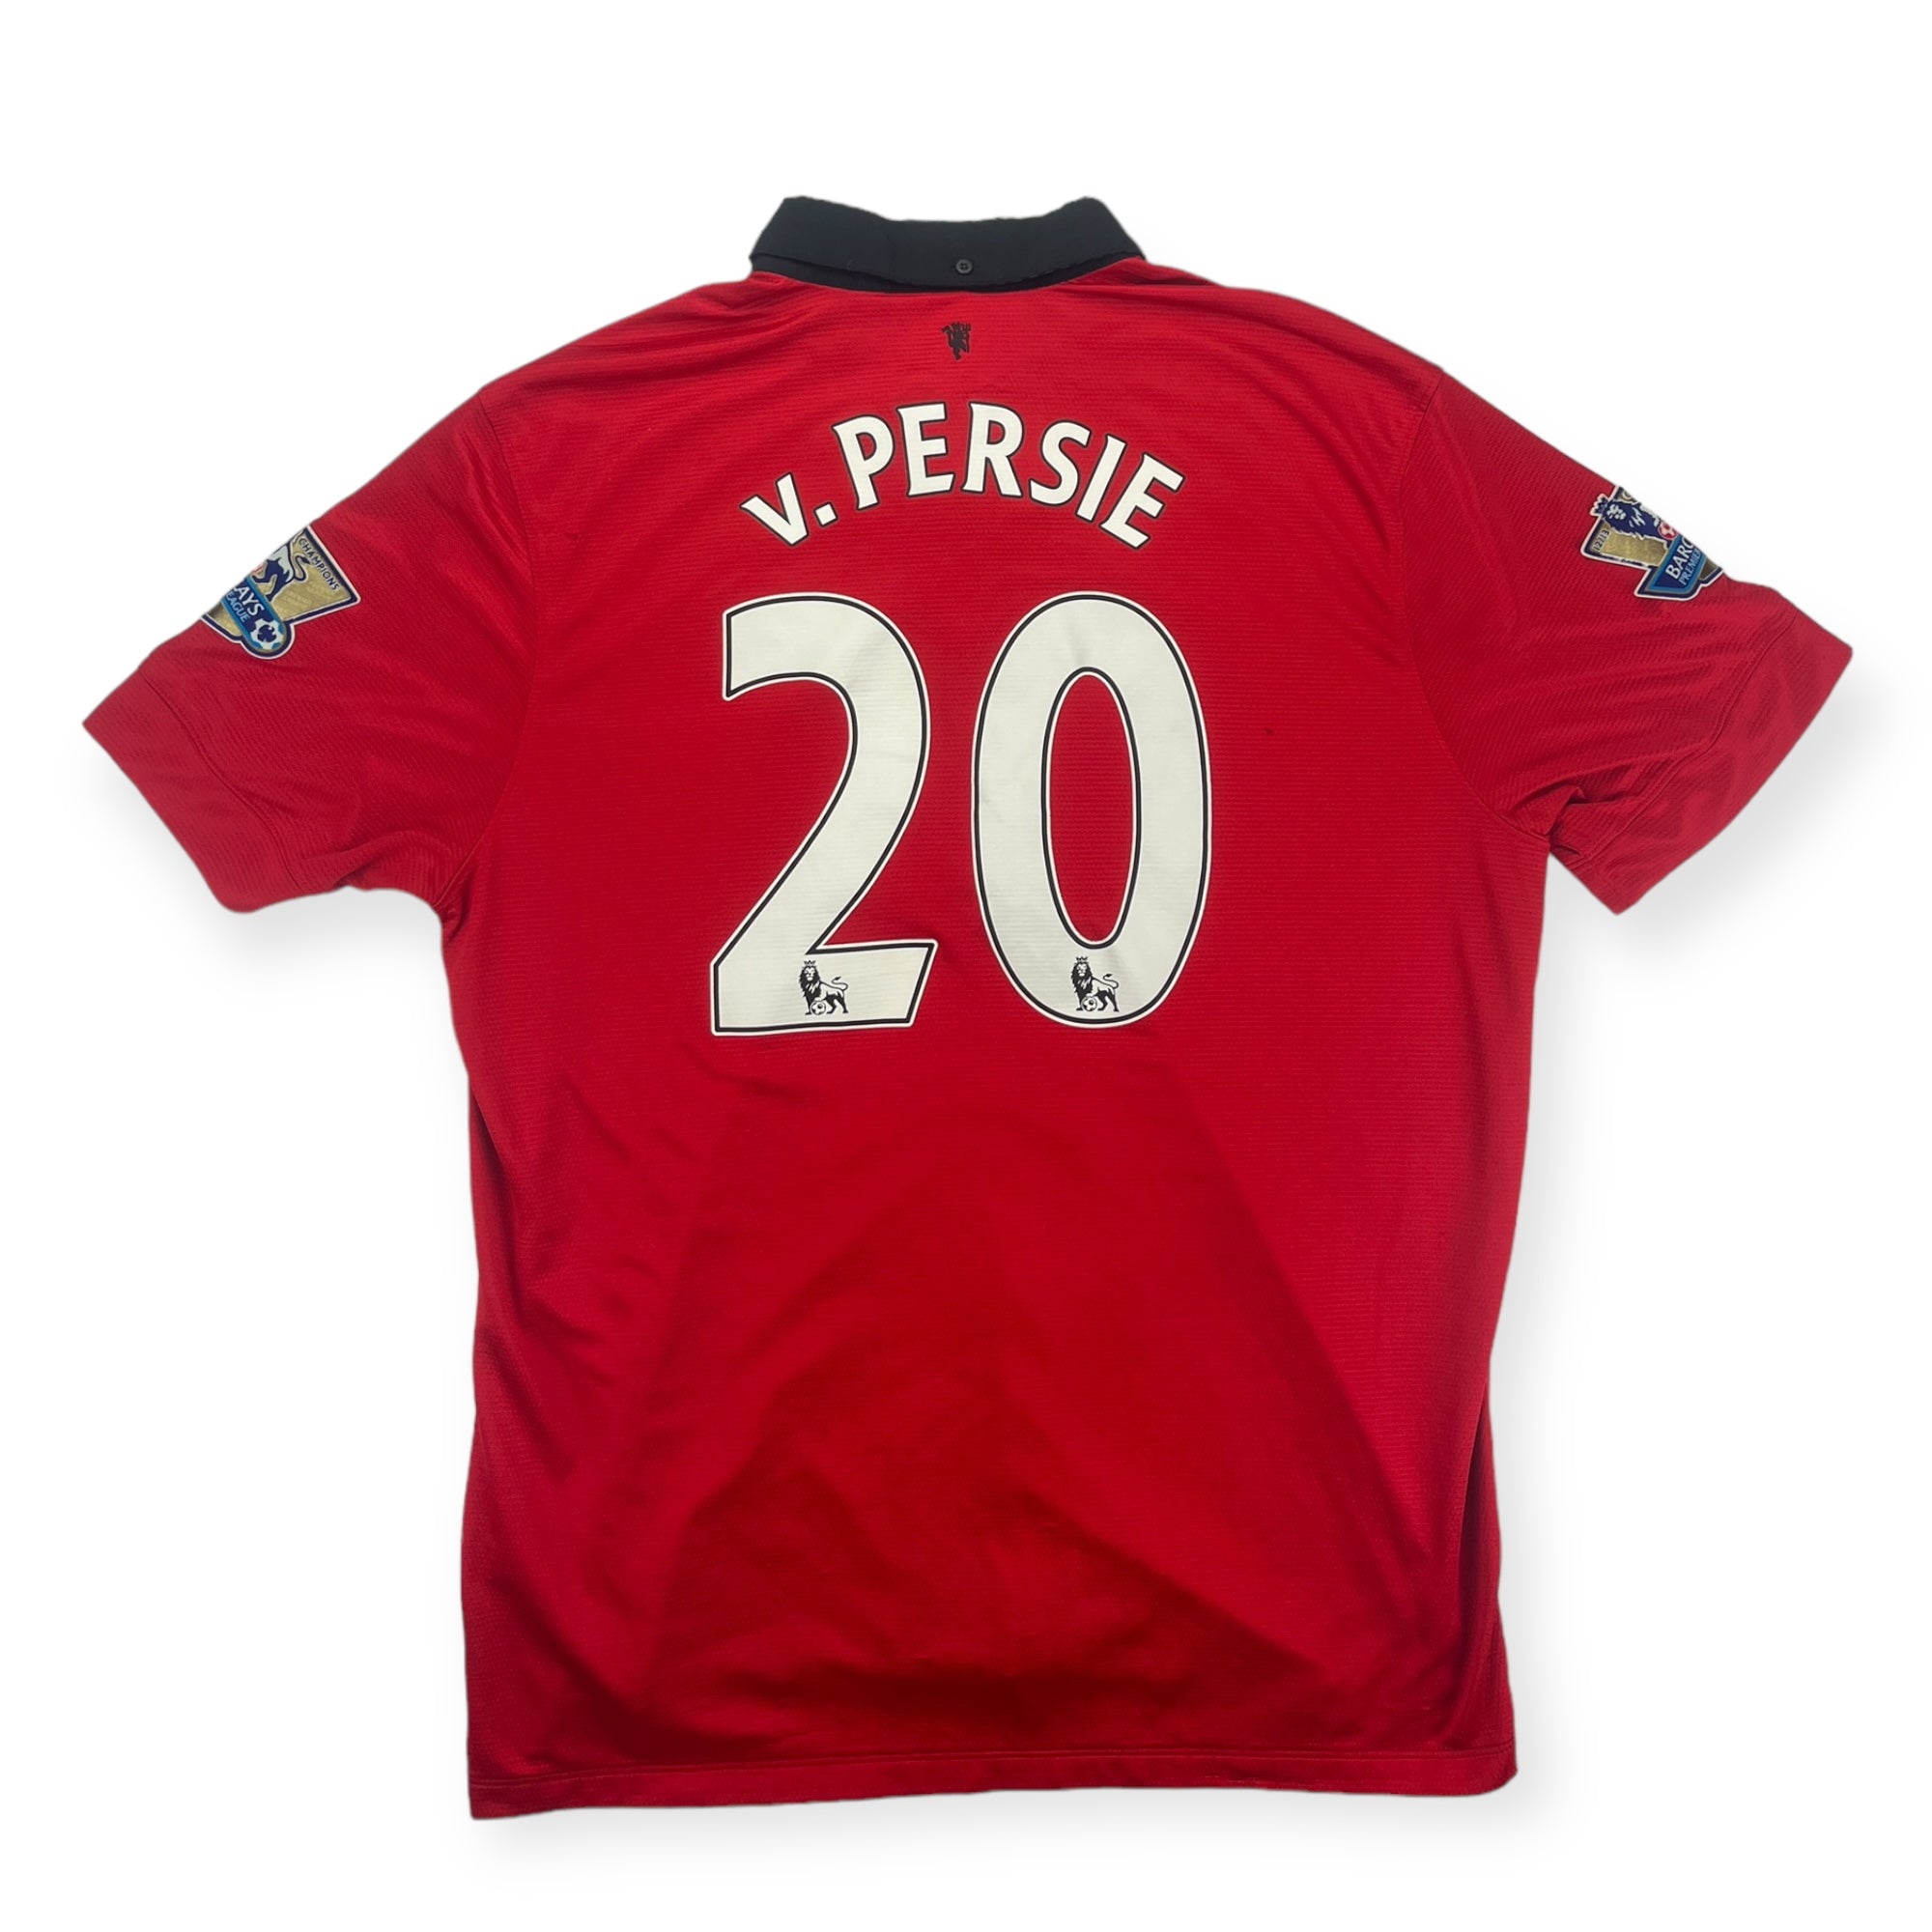 Manchester United 2013 Home Shirt, V.Persie 20